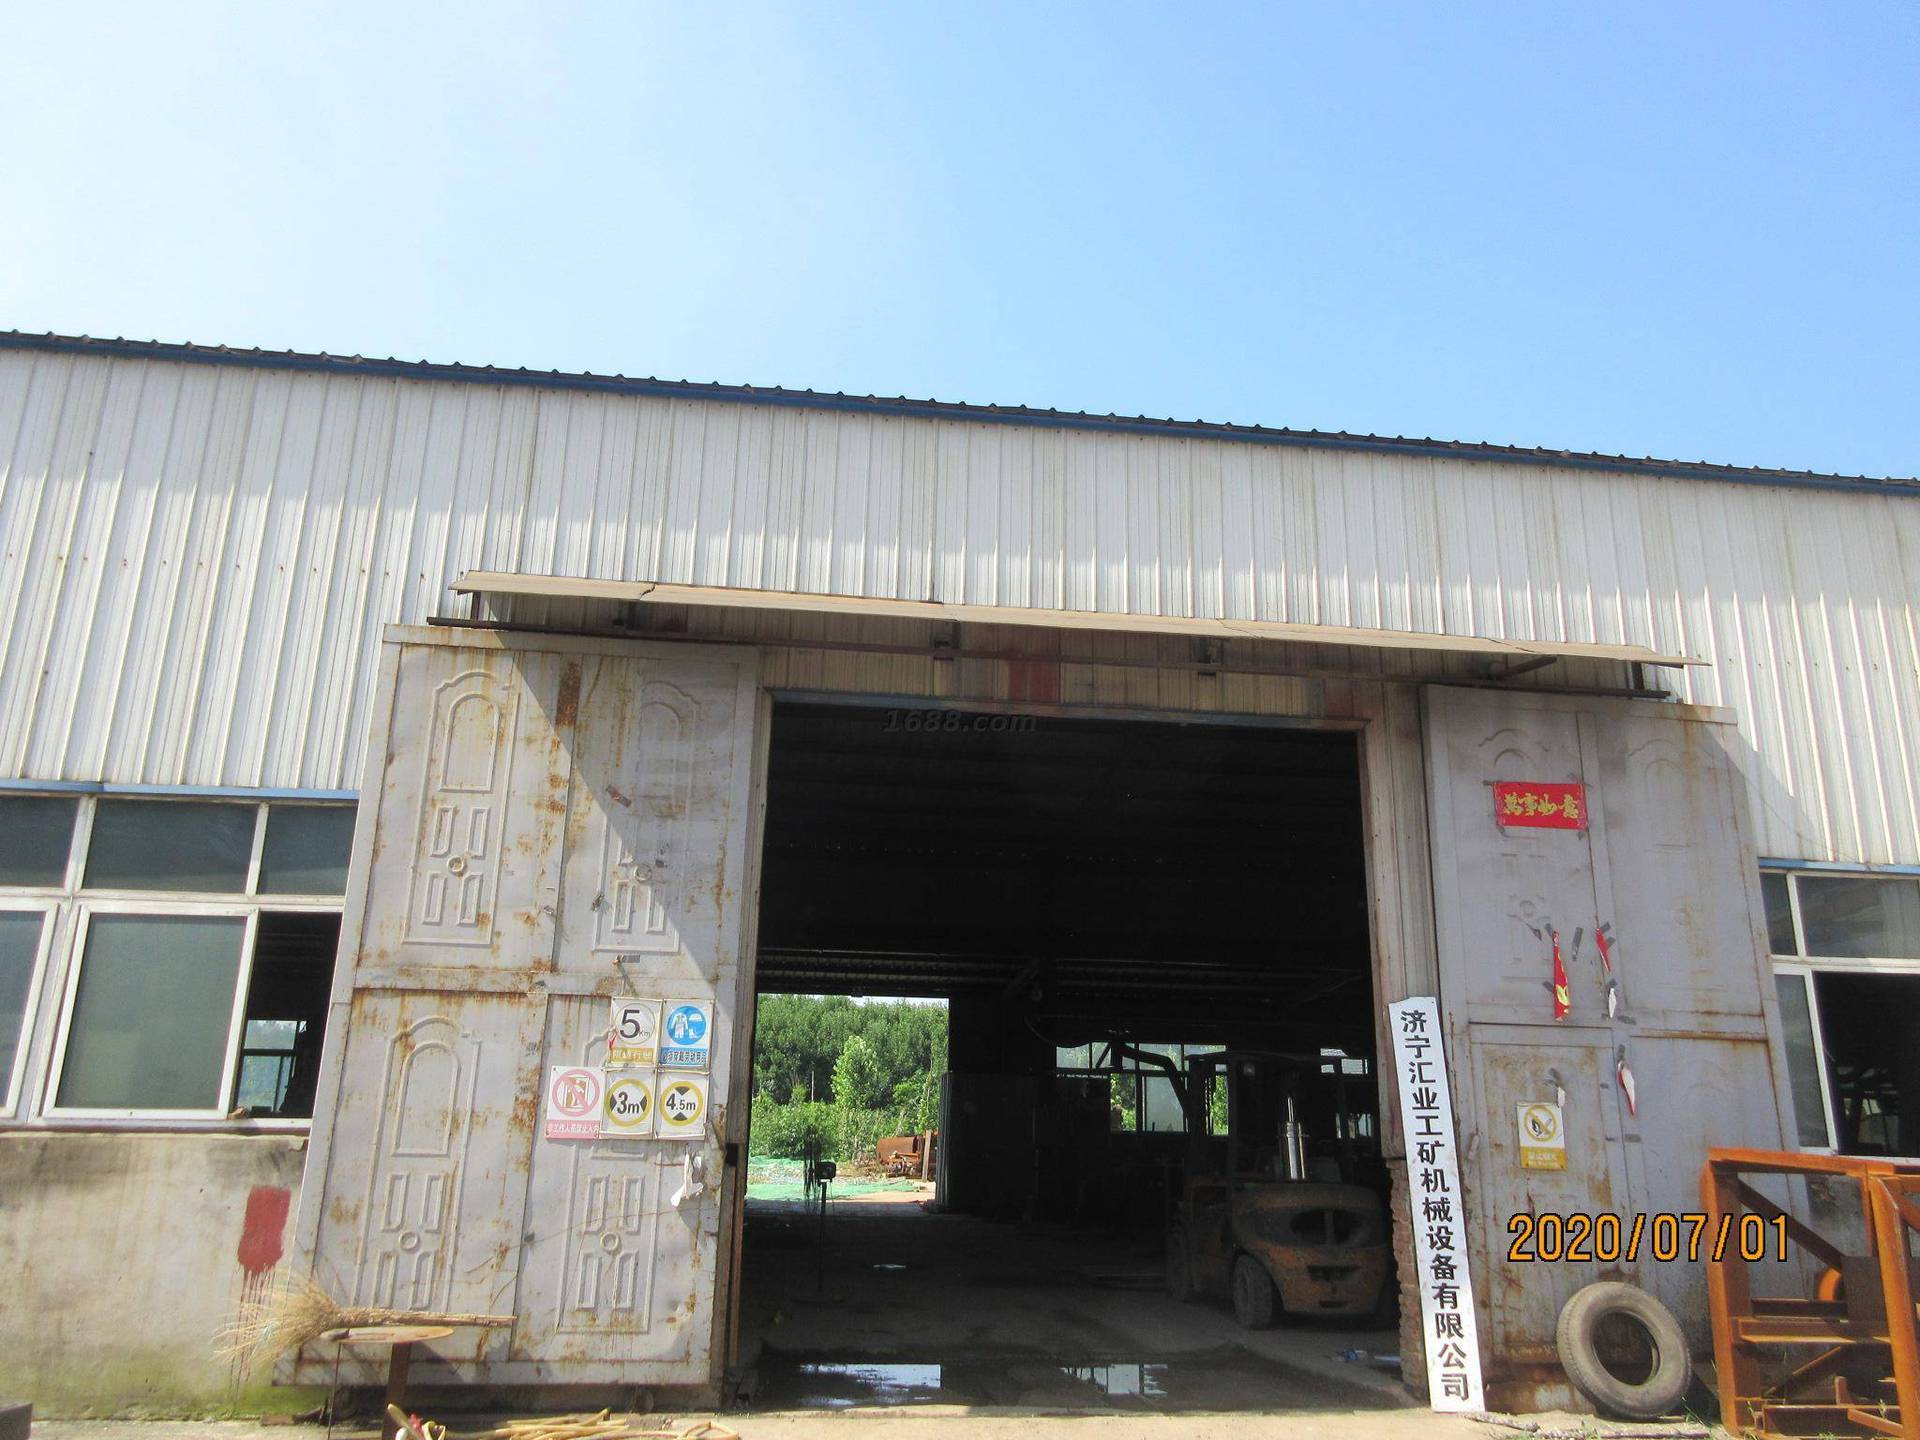 Jining Huiye Industrial and Mining Machinery Equipment Co., Ltd